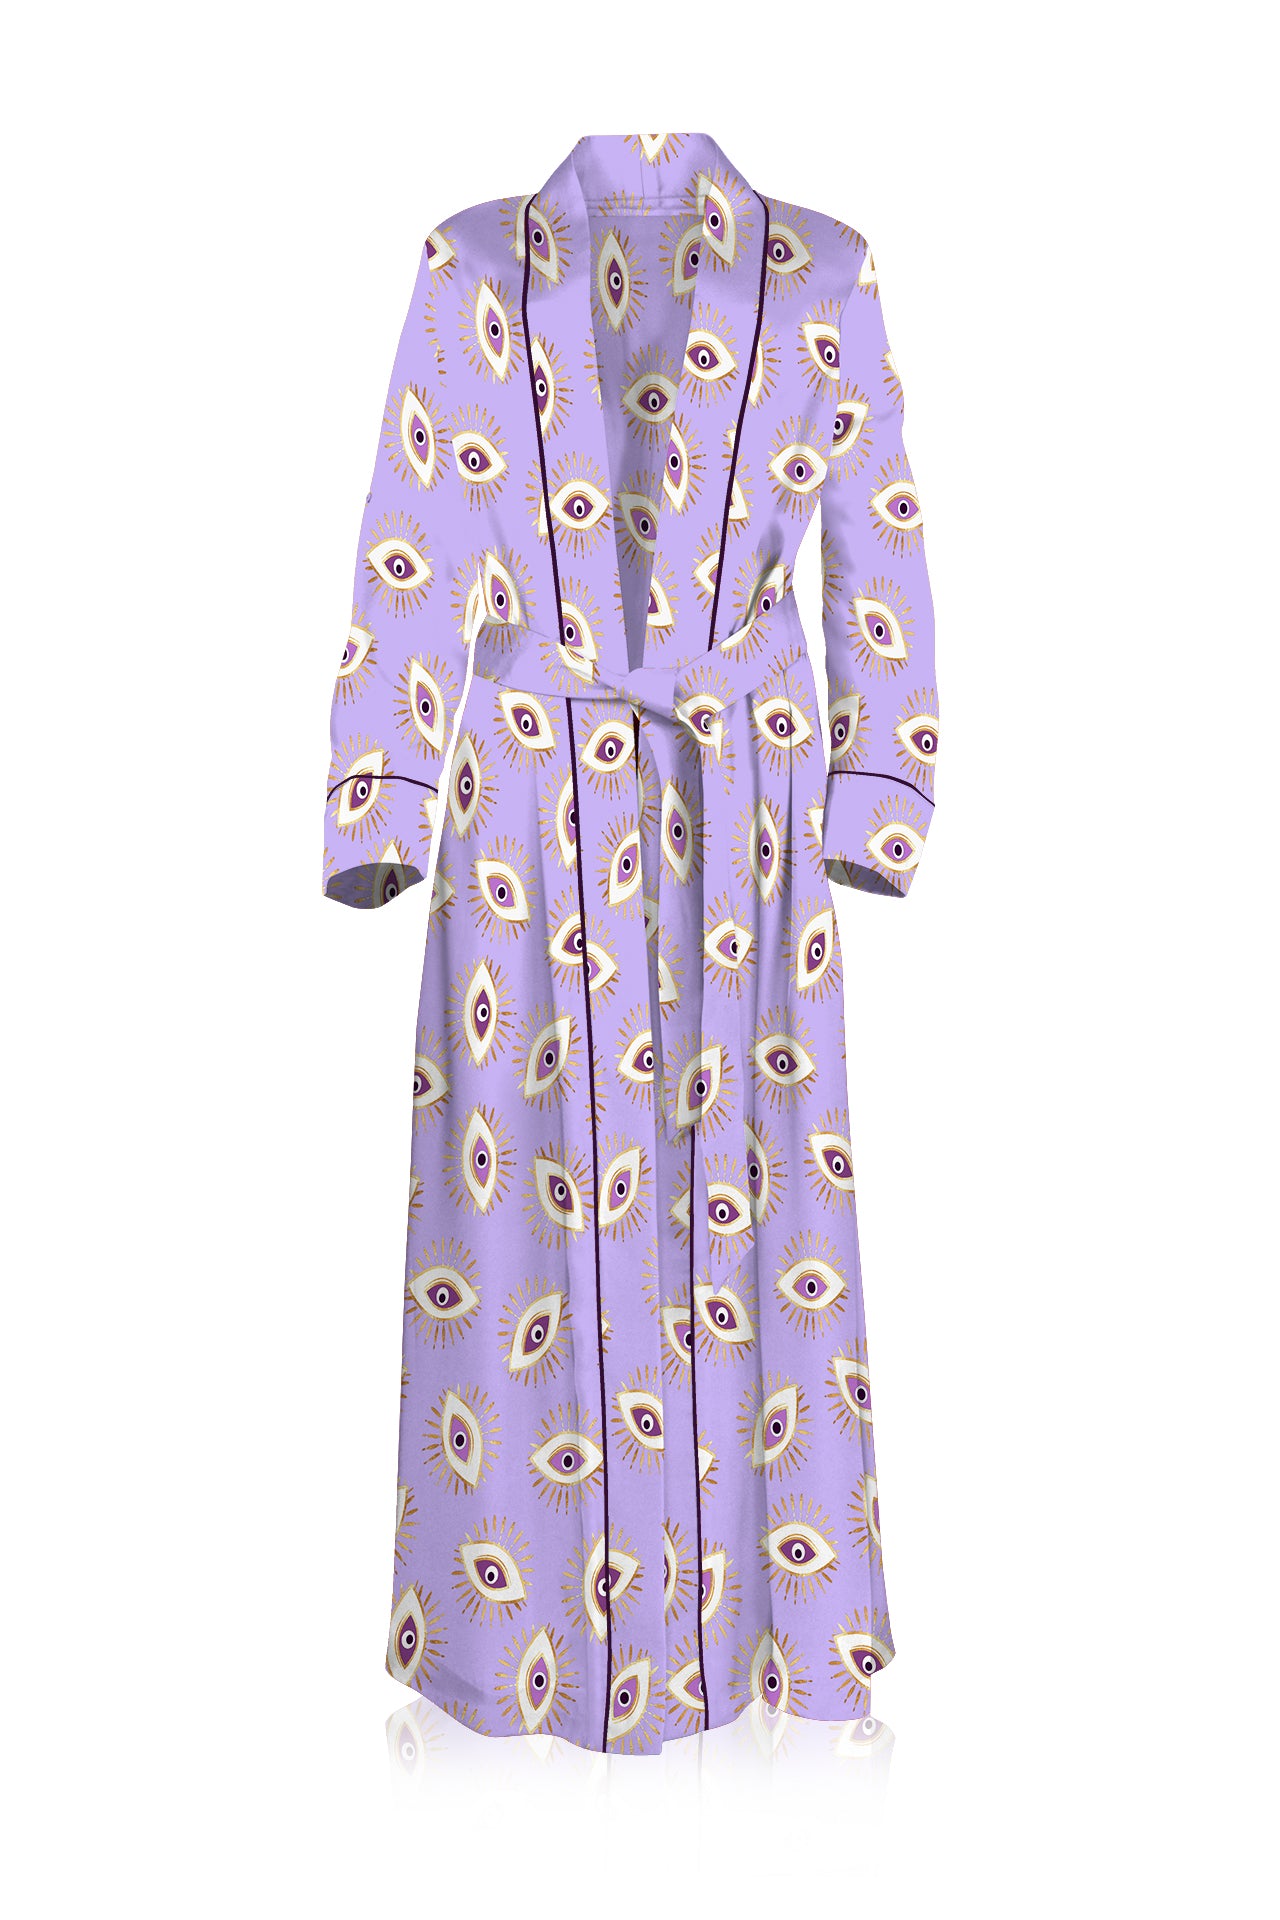 "purple silk kimono robe" "womens kimono robes" "Kyle X Shahida" "silk robes and kimonos"